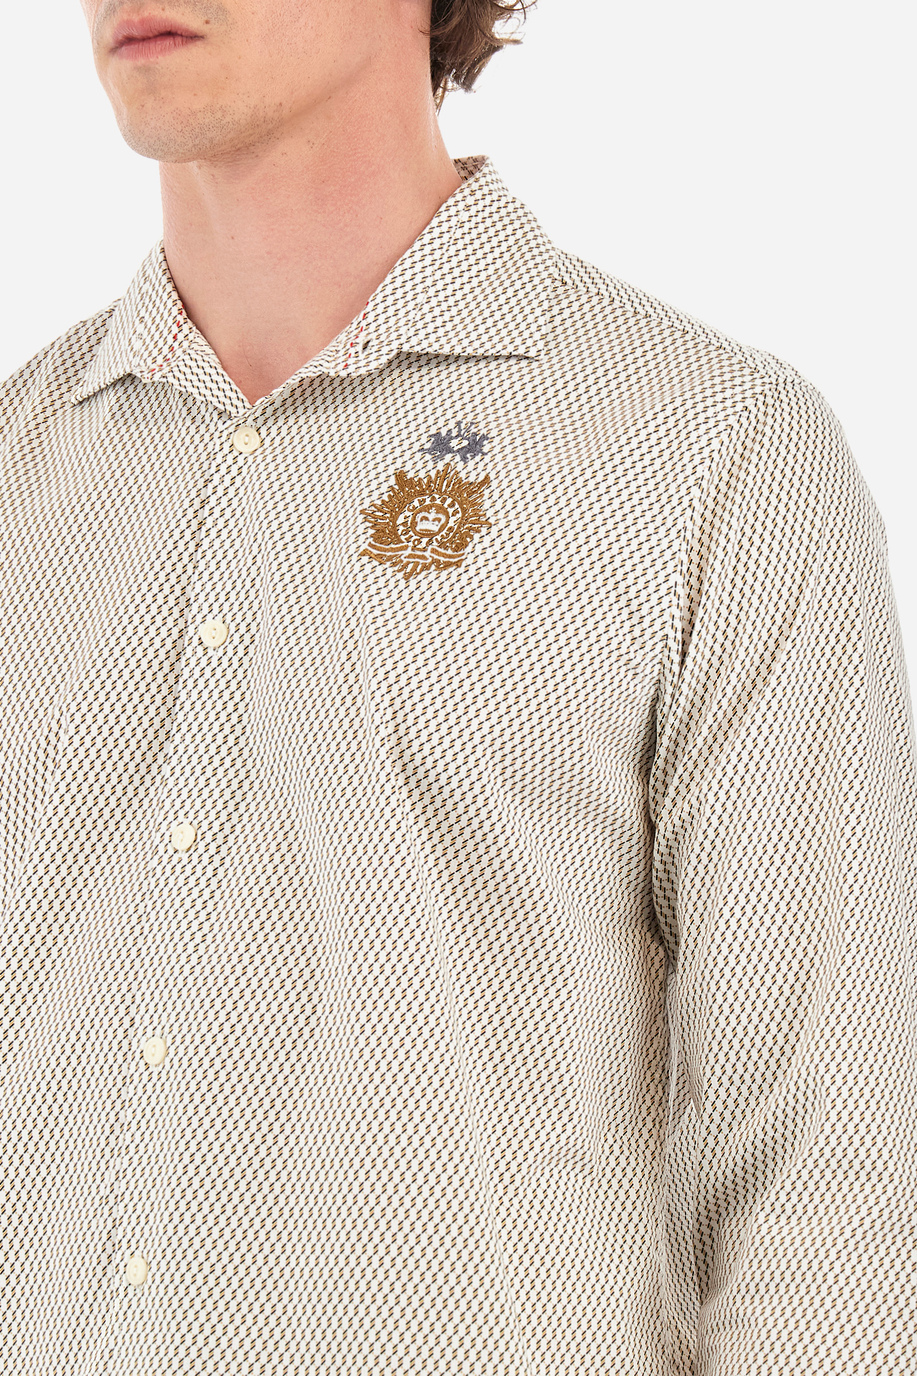 Camicia Guards regular fit in cotone - Innocent - Camicie | La Martina - Official Online Shop